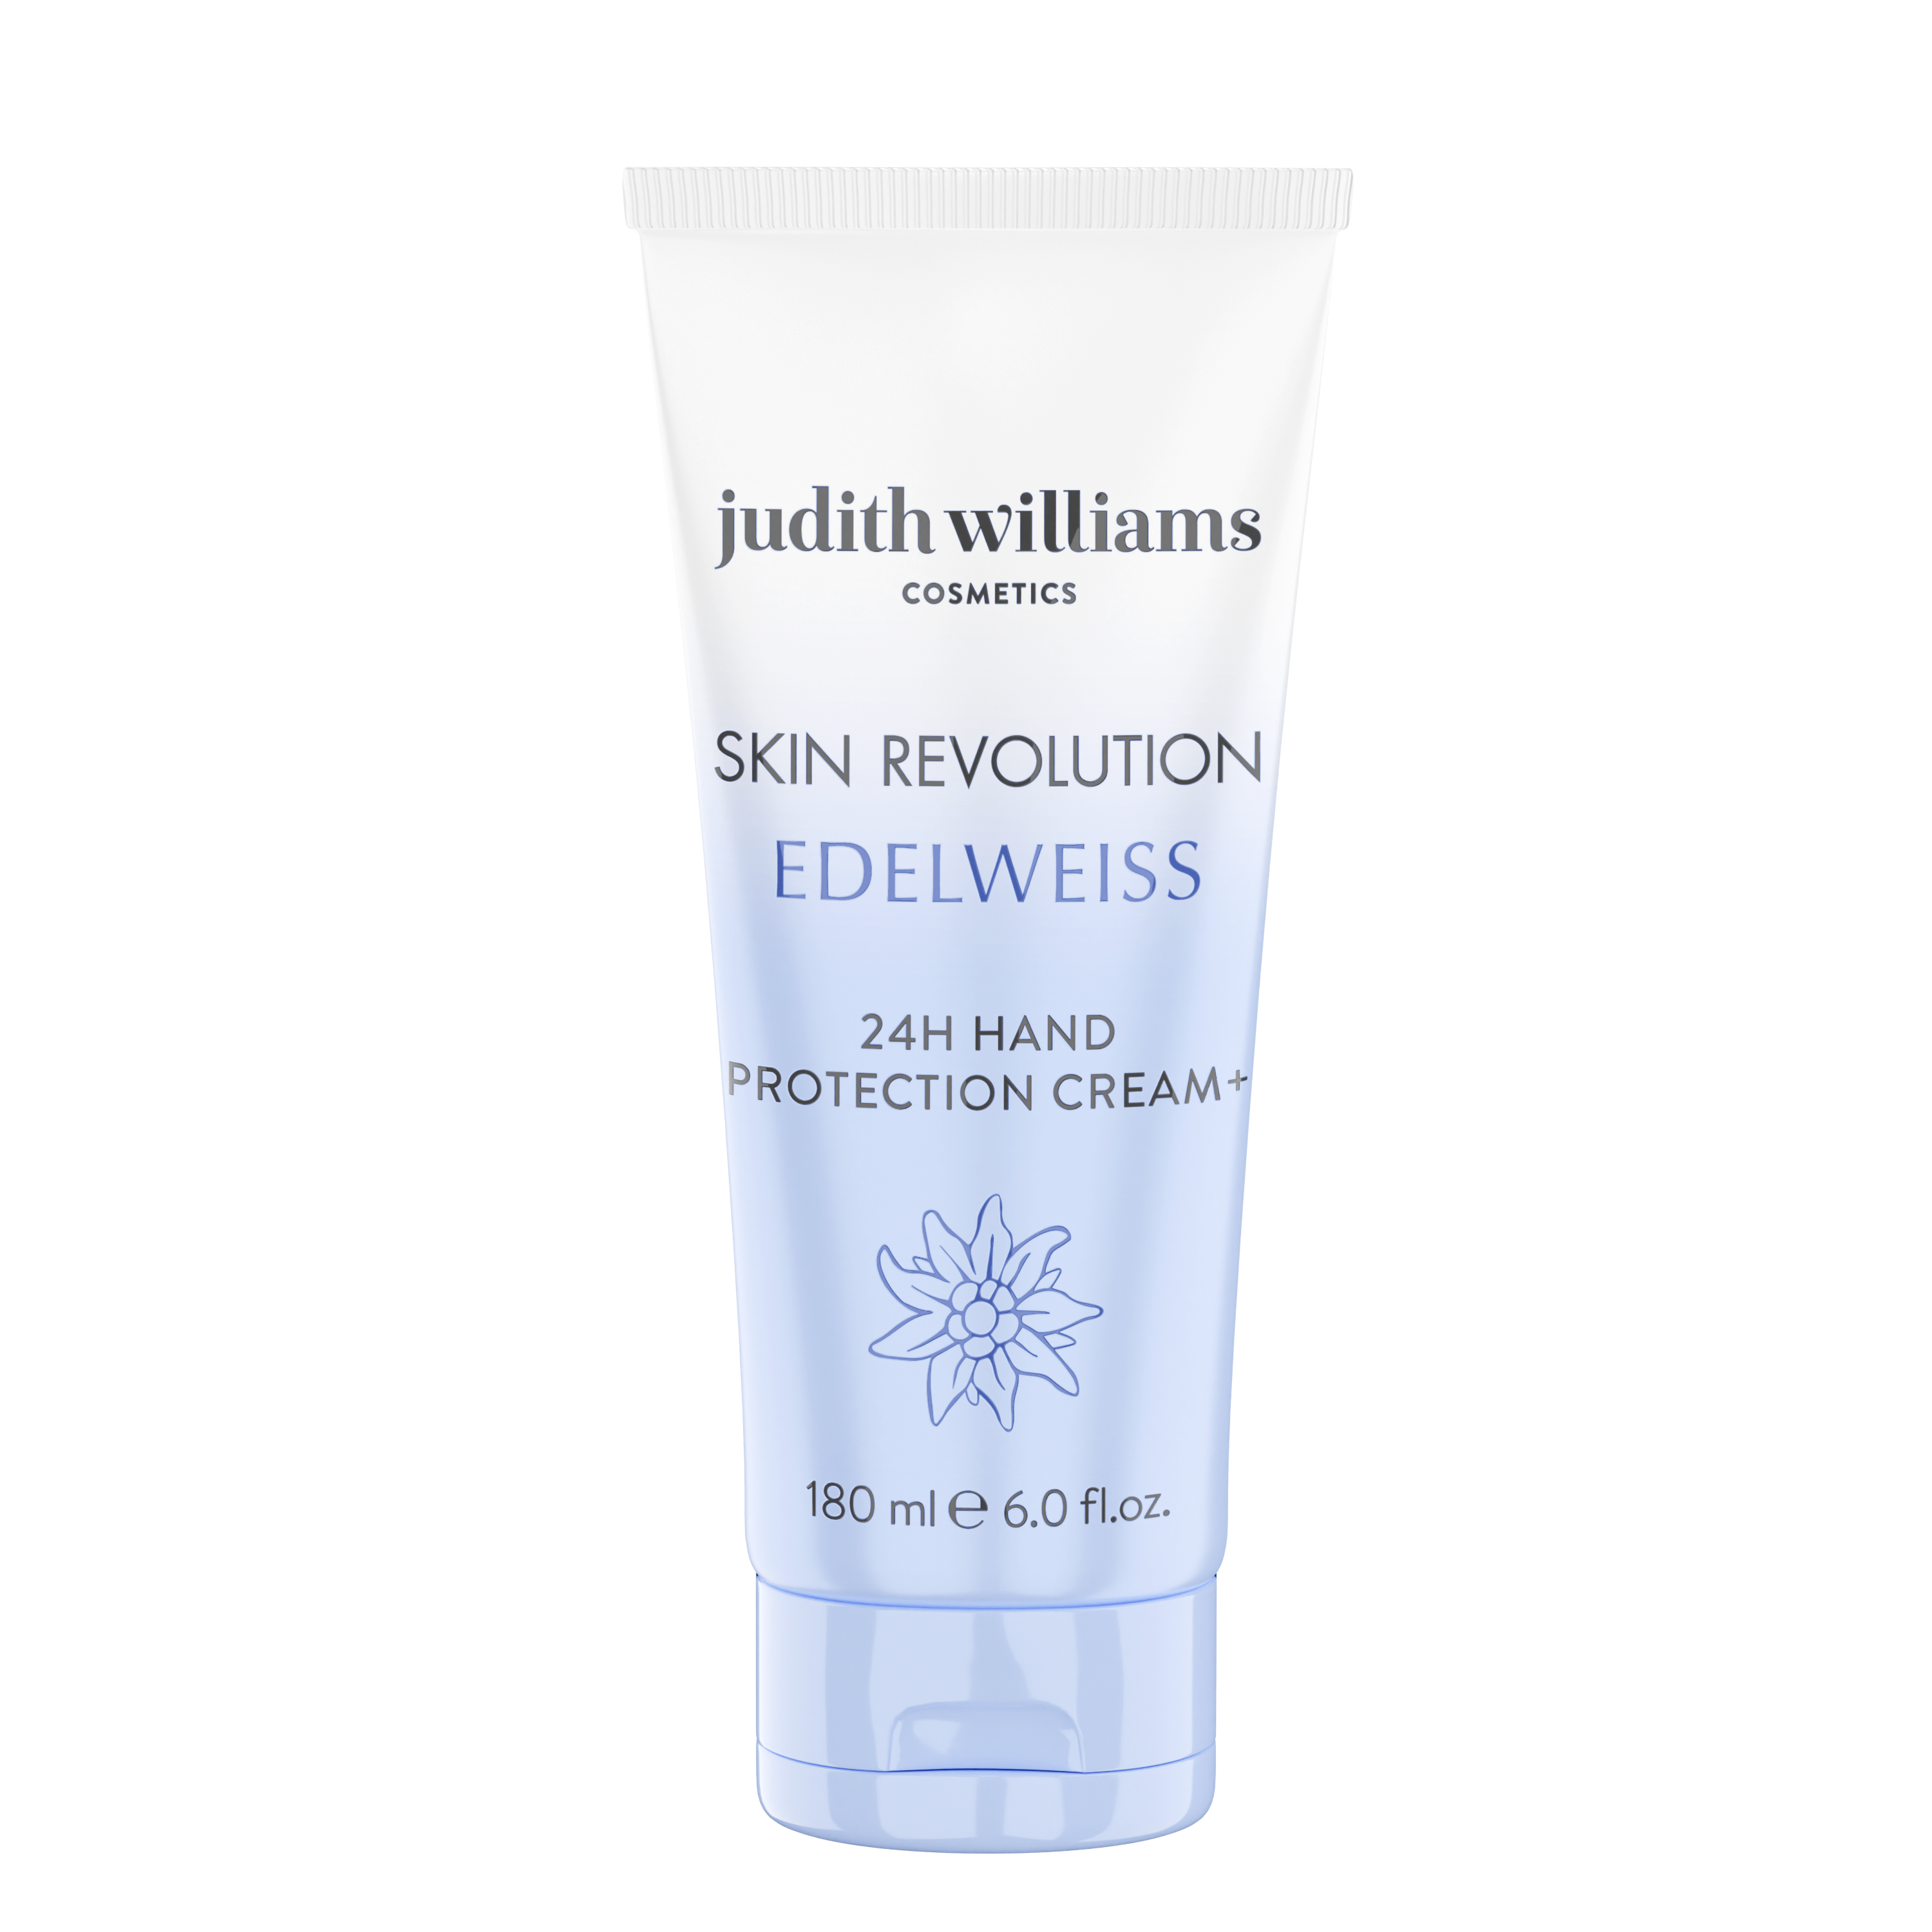 Handcreme | Skin Revolution Edelweiss | 24h Hand Protection Cream + | Judith Williams